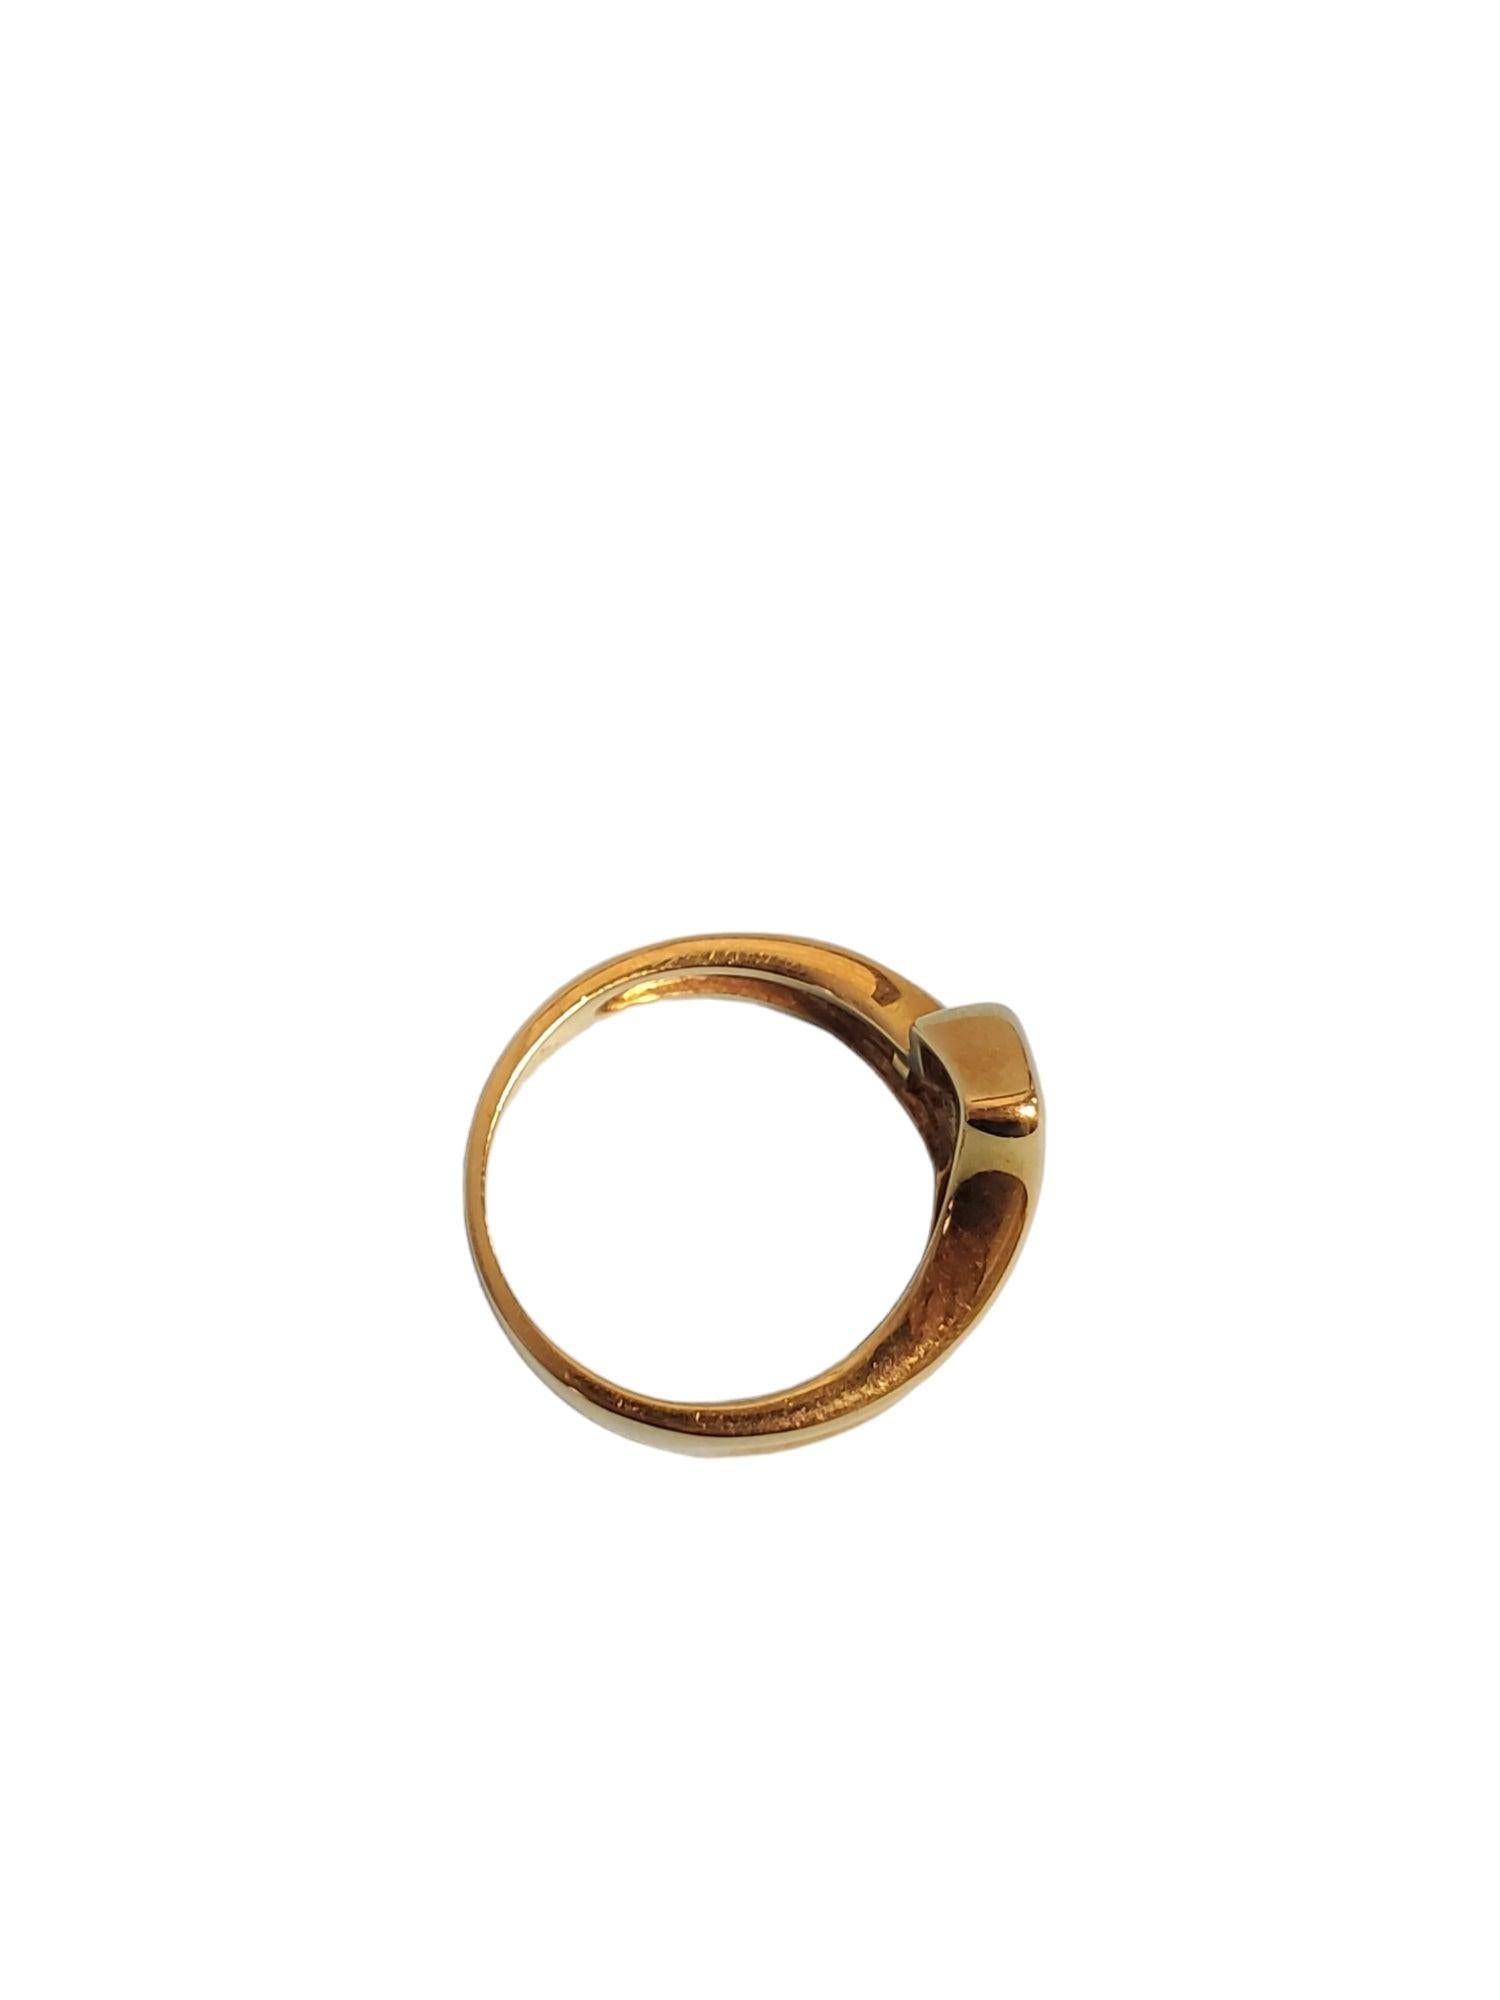 Baguette Cut Sapphire Designer Ring 18k Yellow Gold White VS Diamonds For Sale